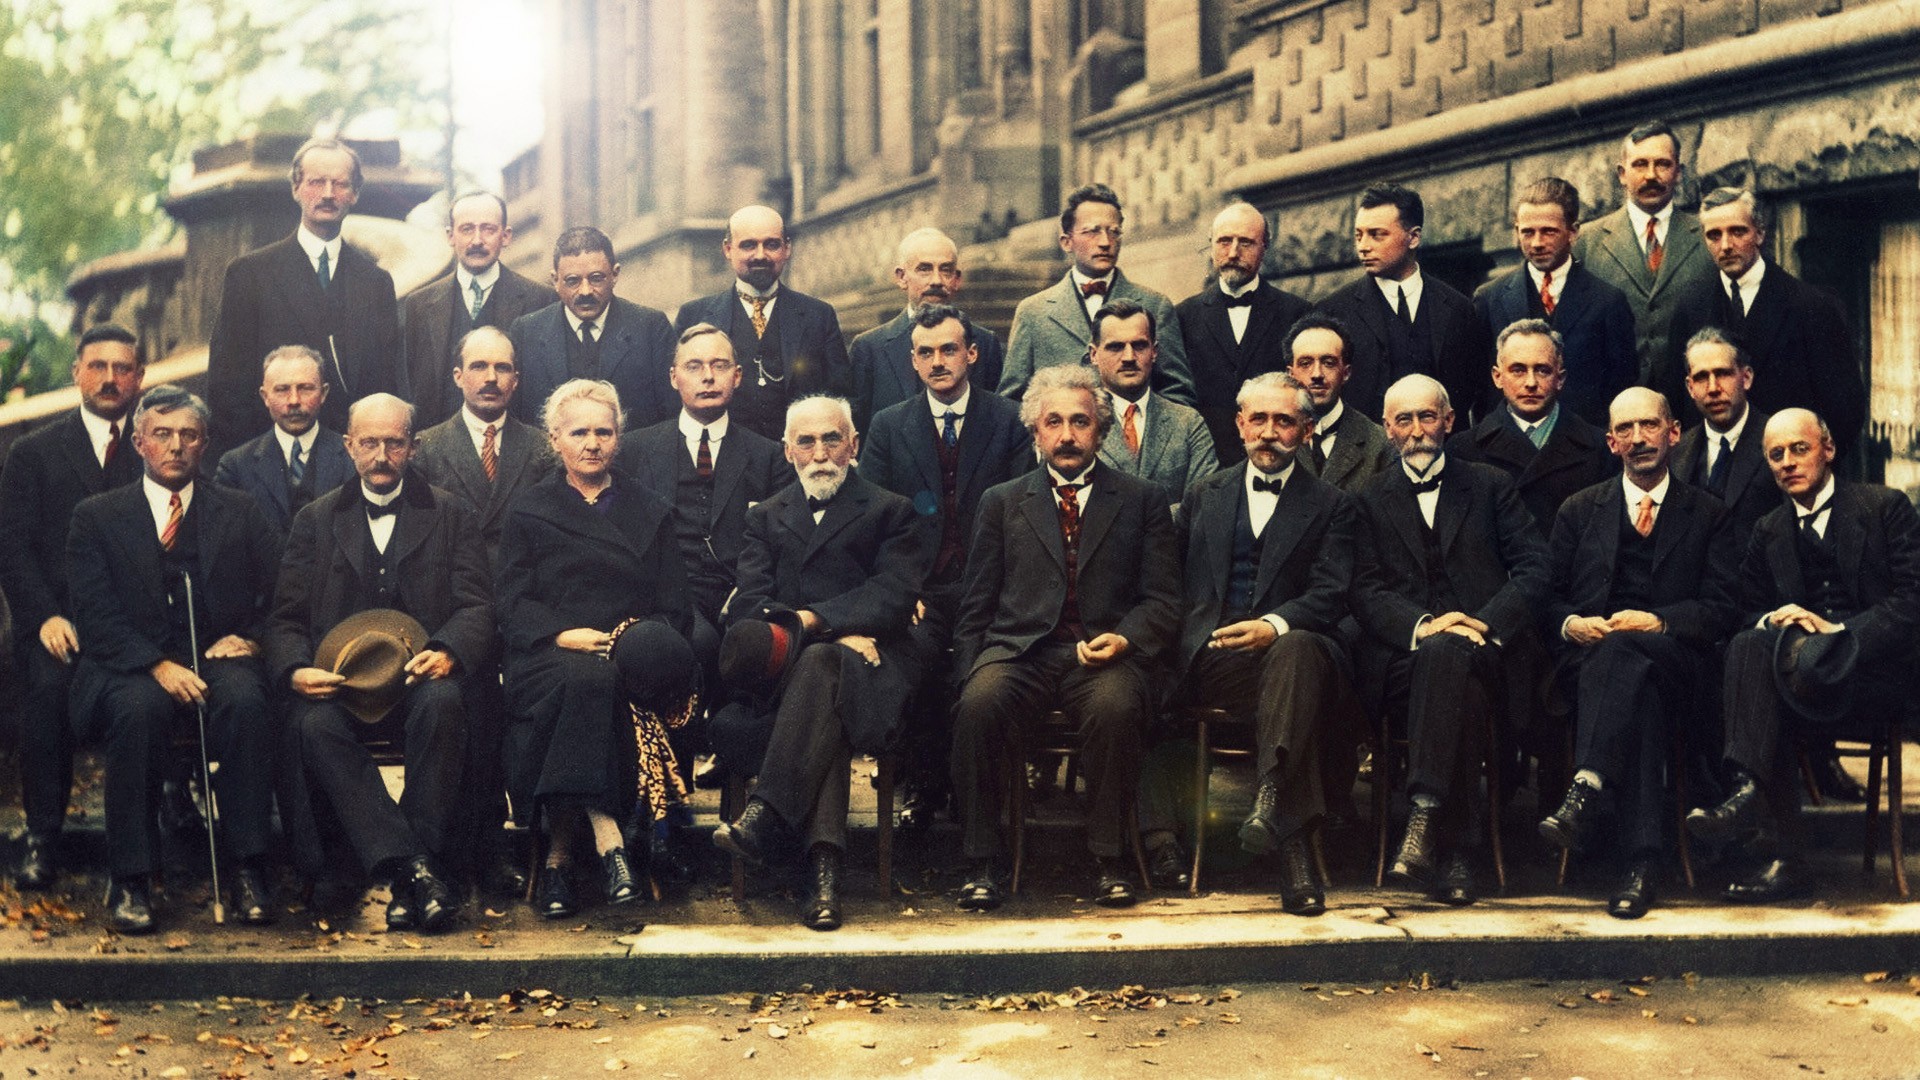 People 1920x1080 Albert Einstein scientists classy Maria Skłodowska-Curie